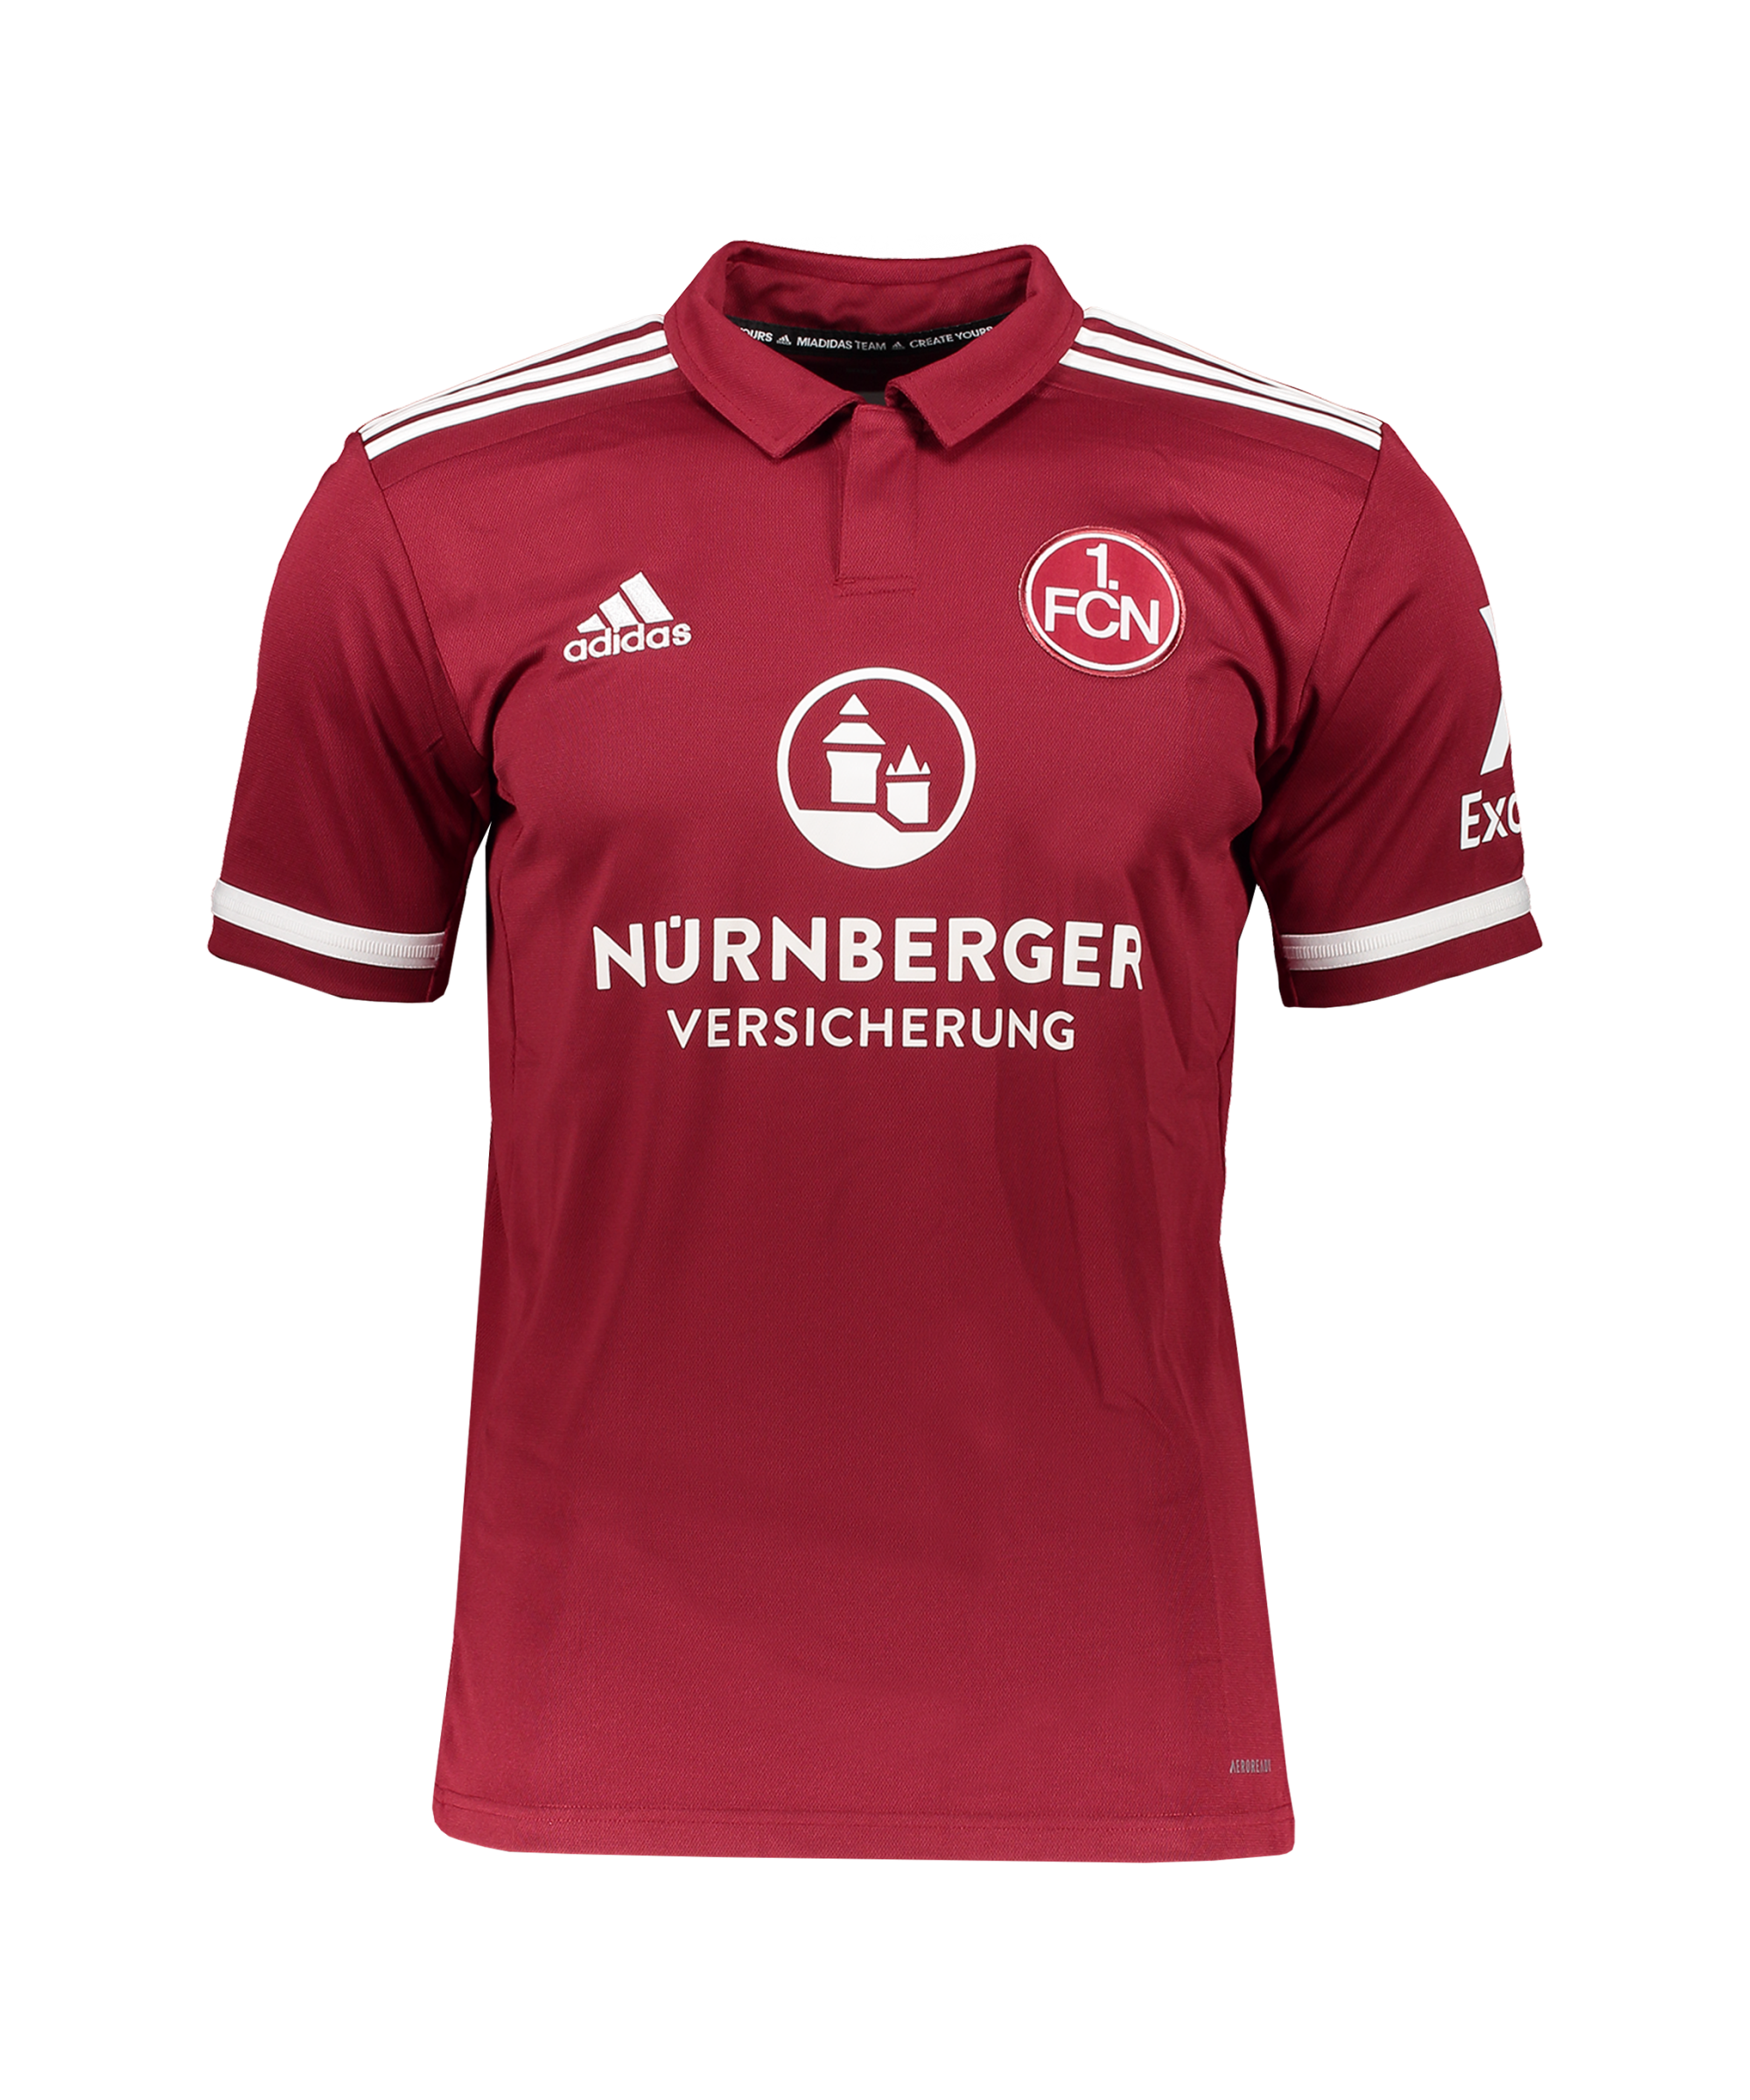 adidas 1. Nürnberg Shirt Home - Red